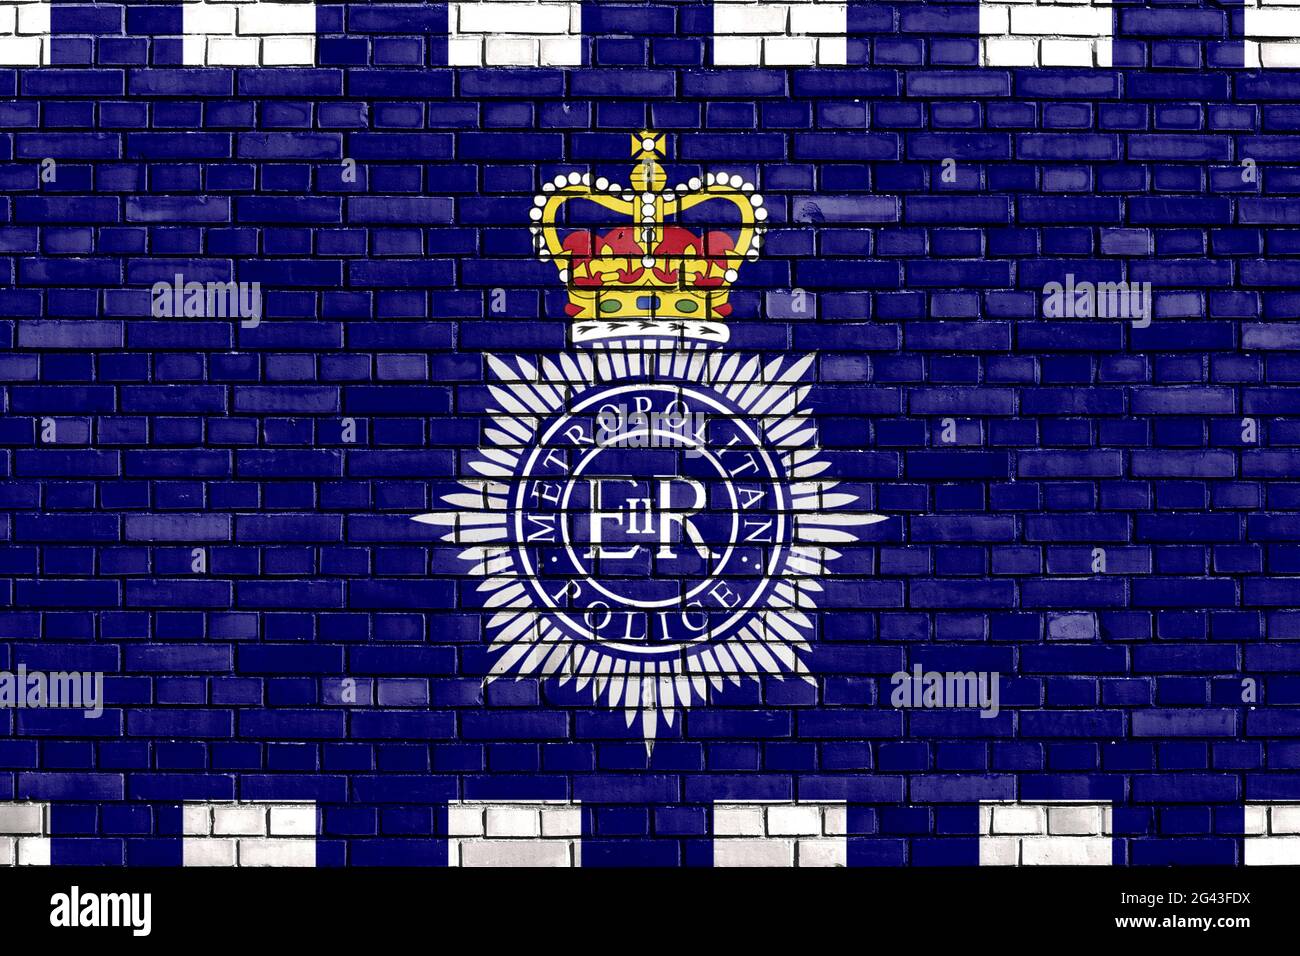 Flag of Metropolitan Police painted on brick wall Stock Photo